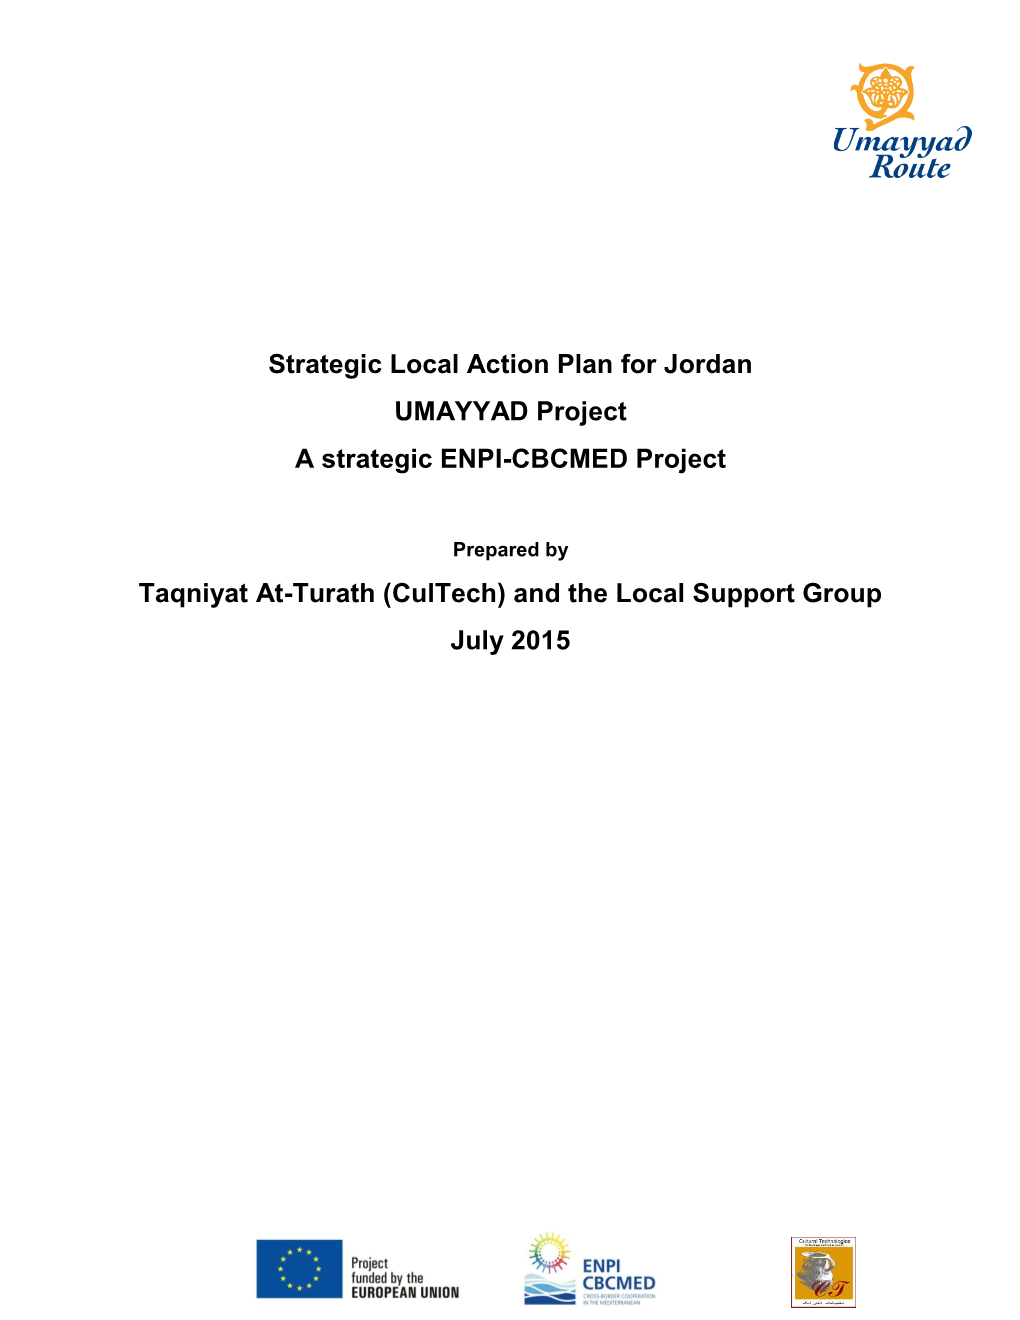 Strategic Local Action Plan for Jordan UMAYYAD Project a Strategic ENPI-CBCMED Project